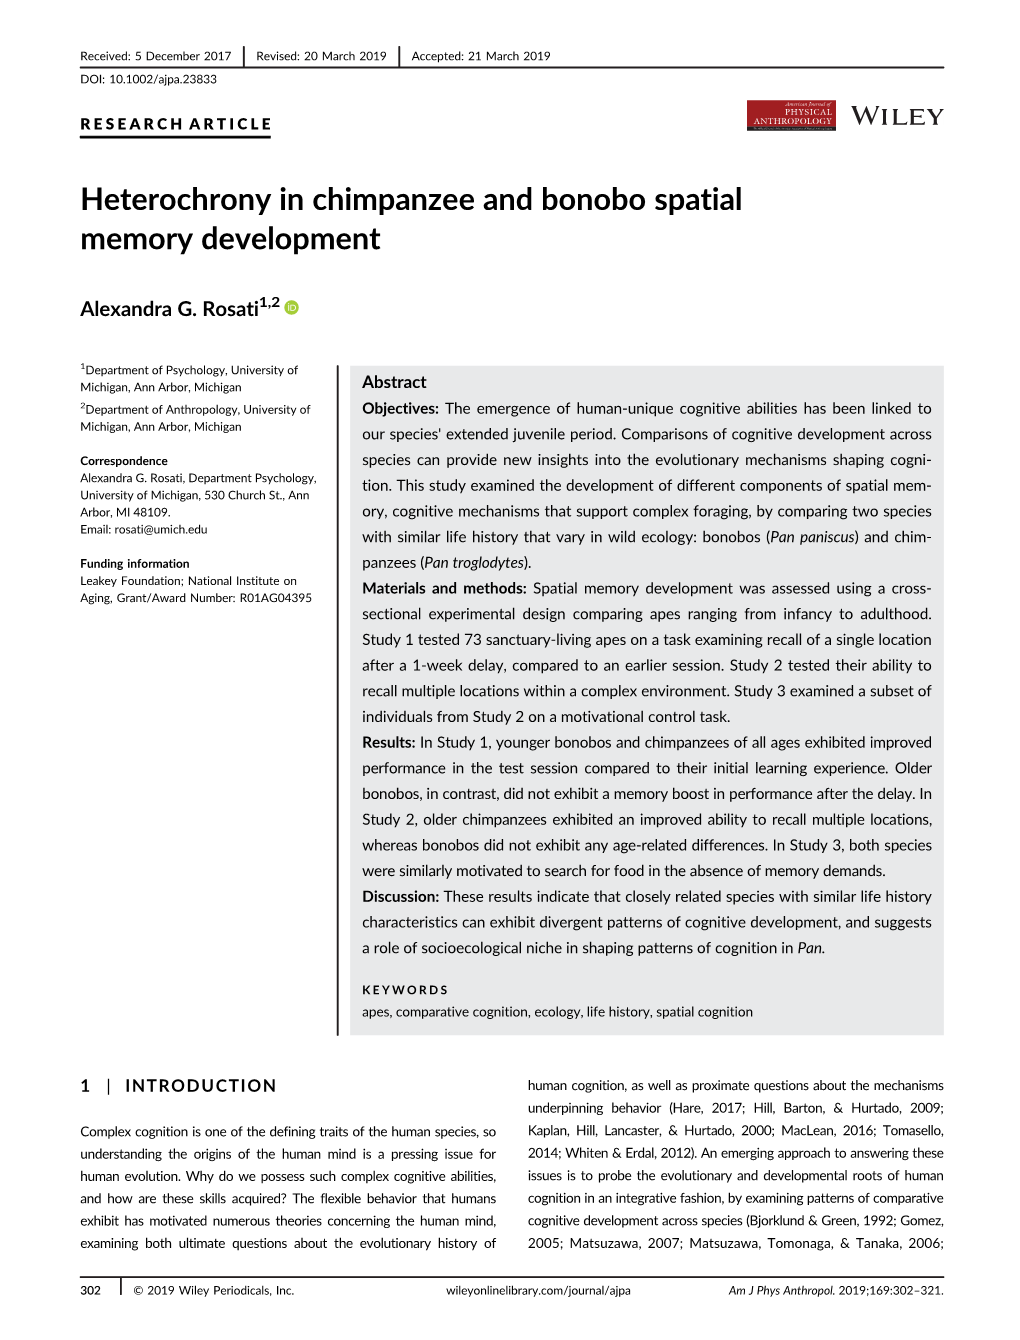 Heterochrony in Chimpanzee and Bonobo Spatial Memory Development